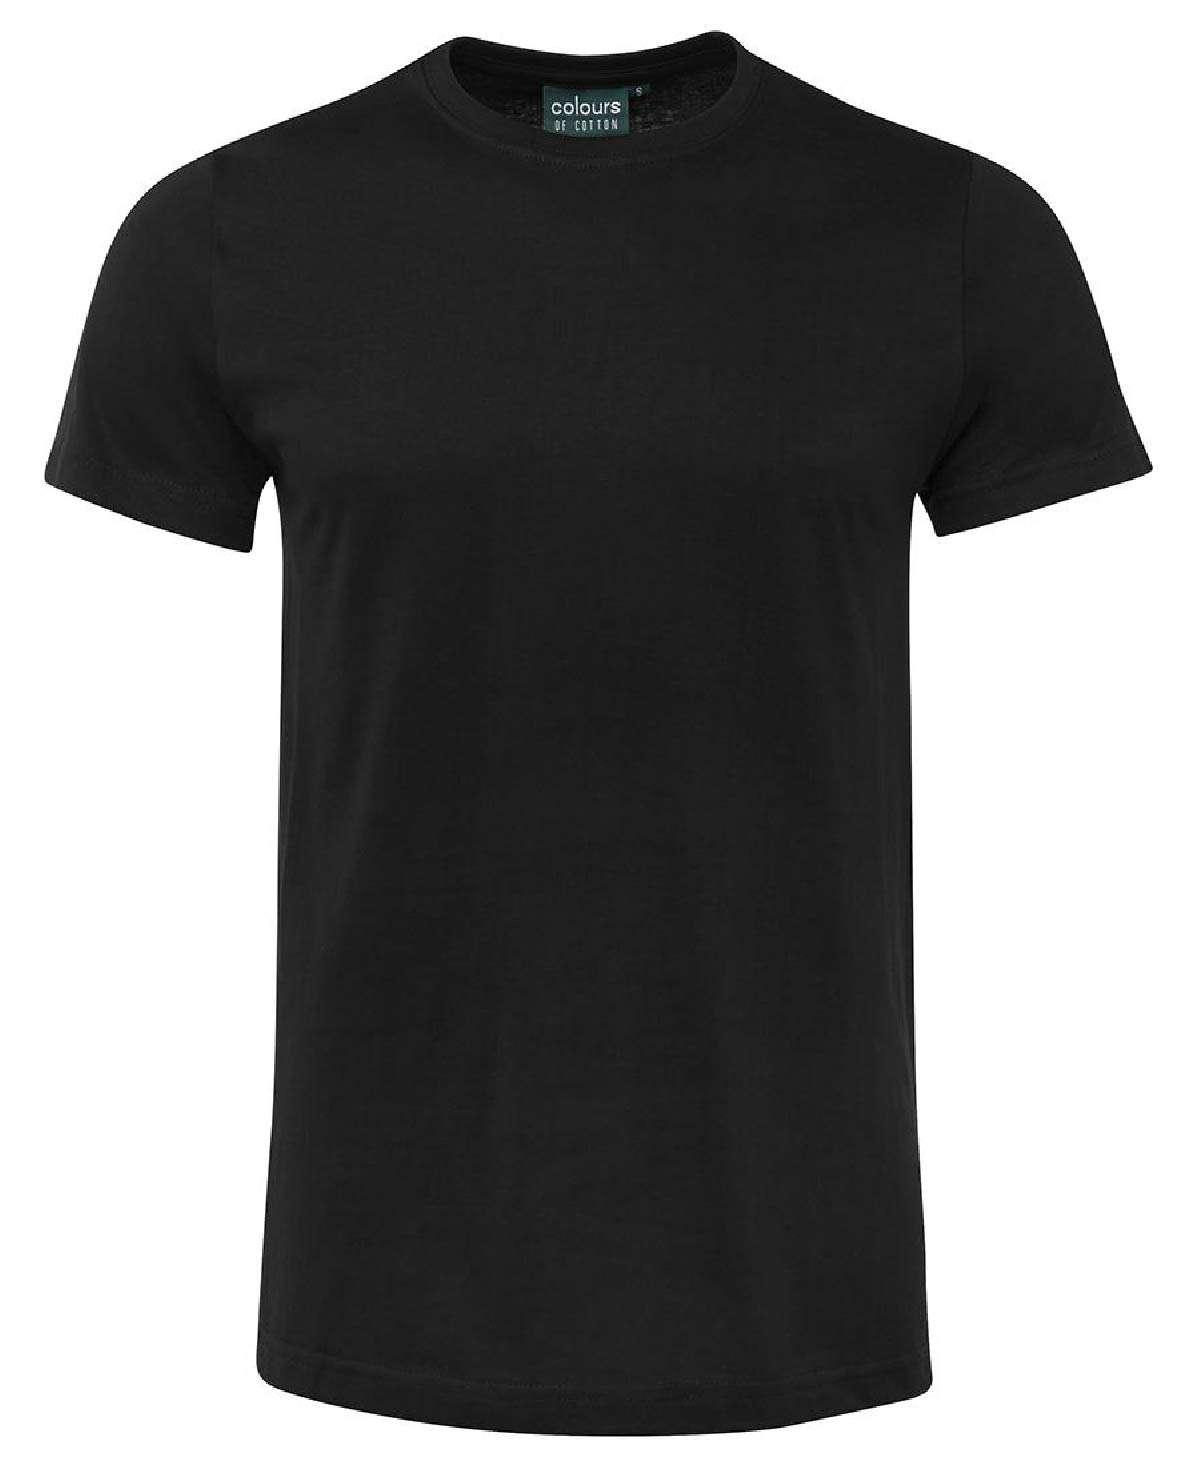 Plain unprinted S1NFT Tshirt - Colours of Cotton - tshirtsrus.com.au